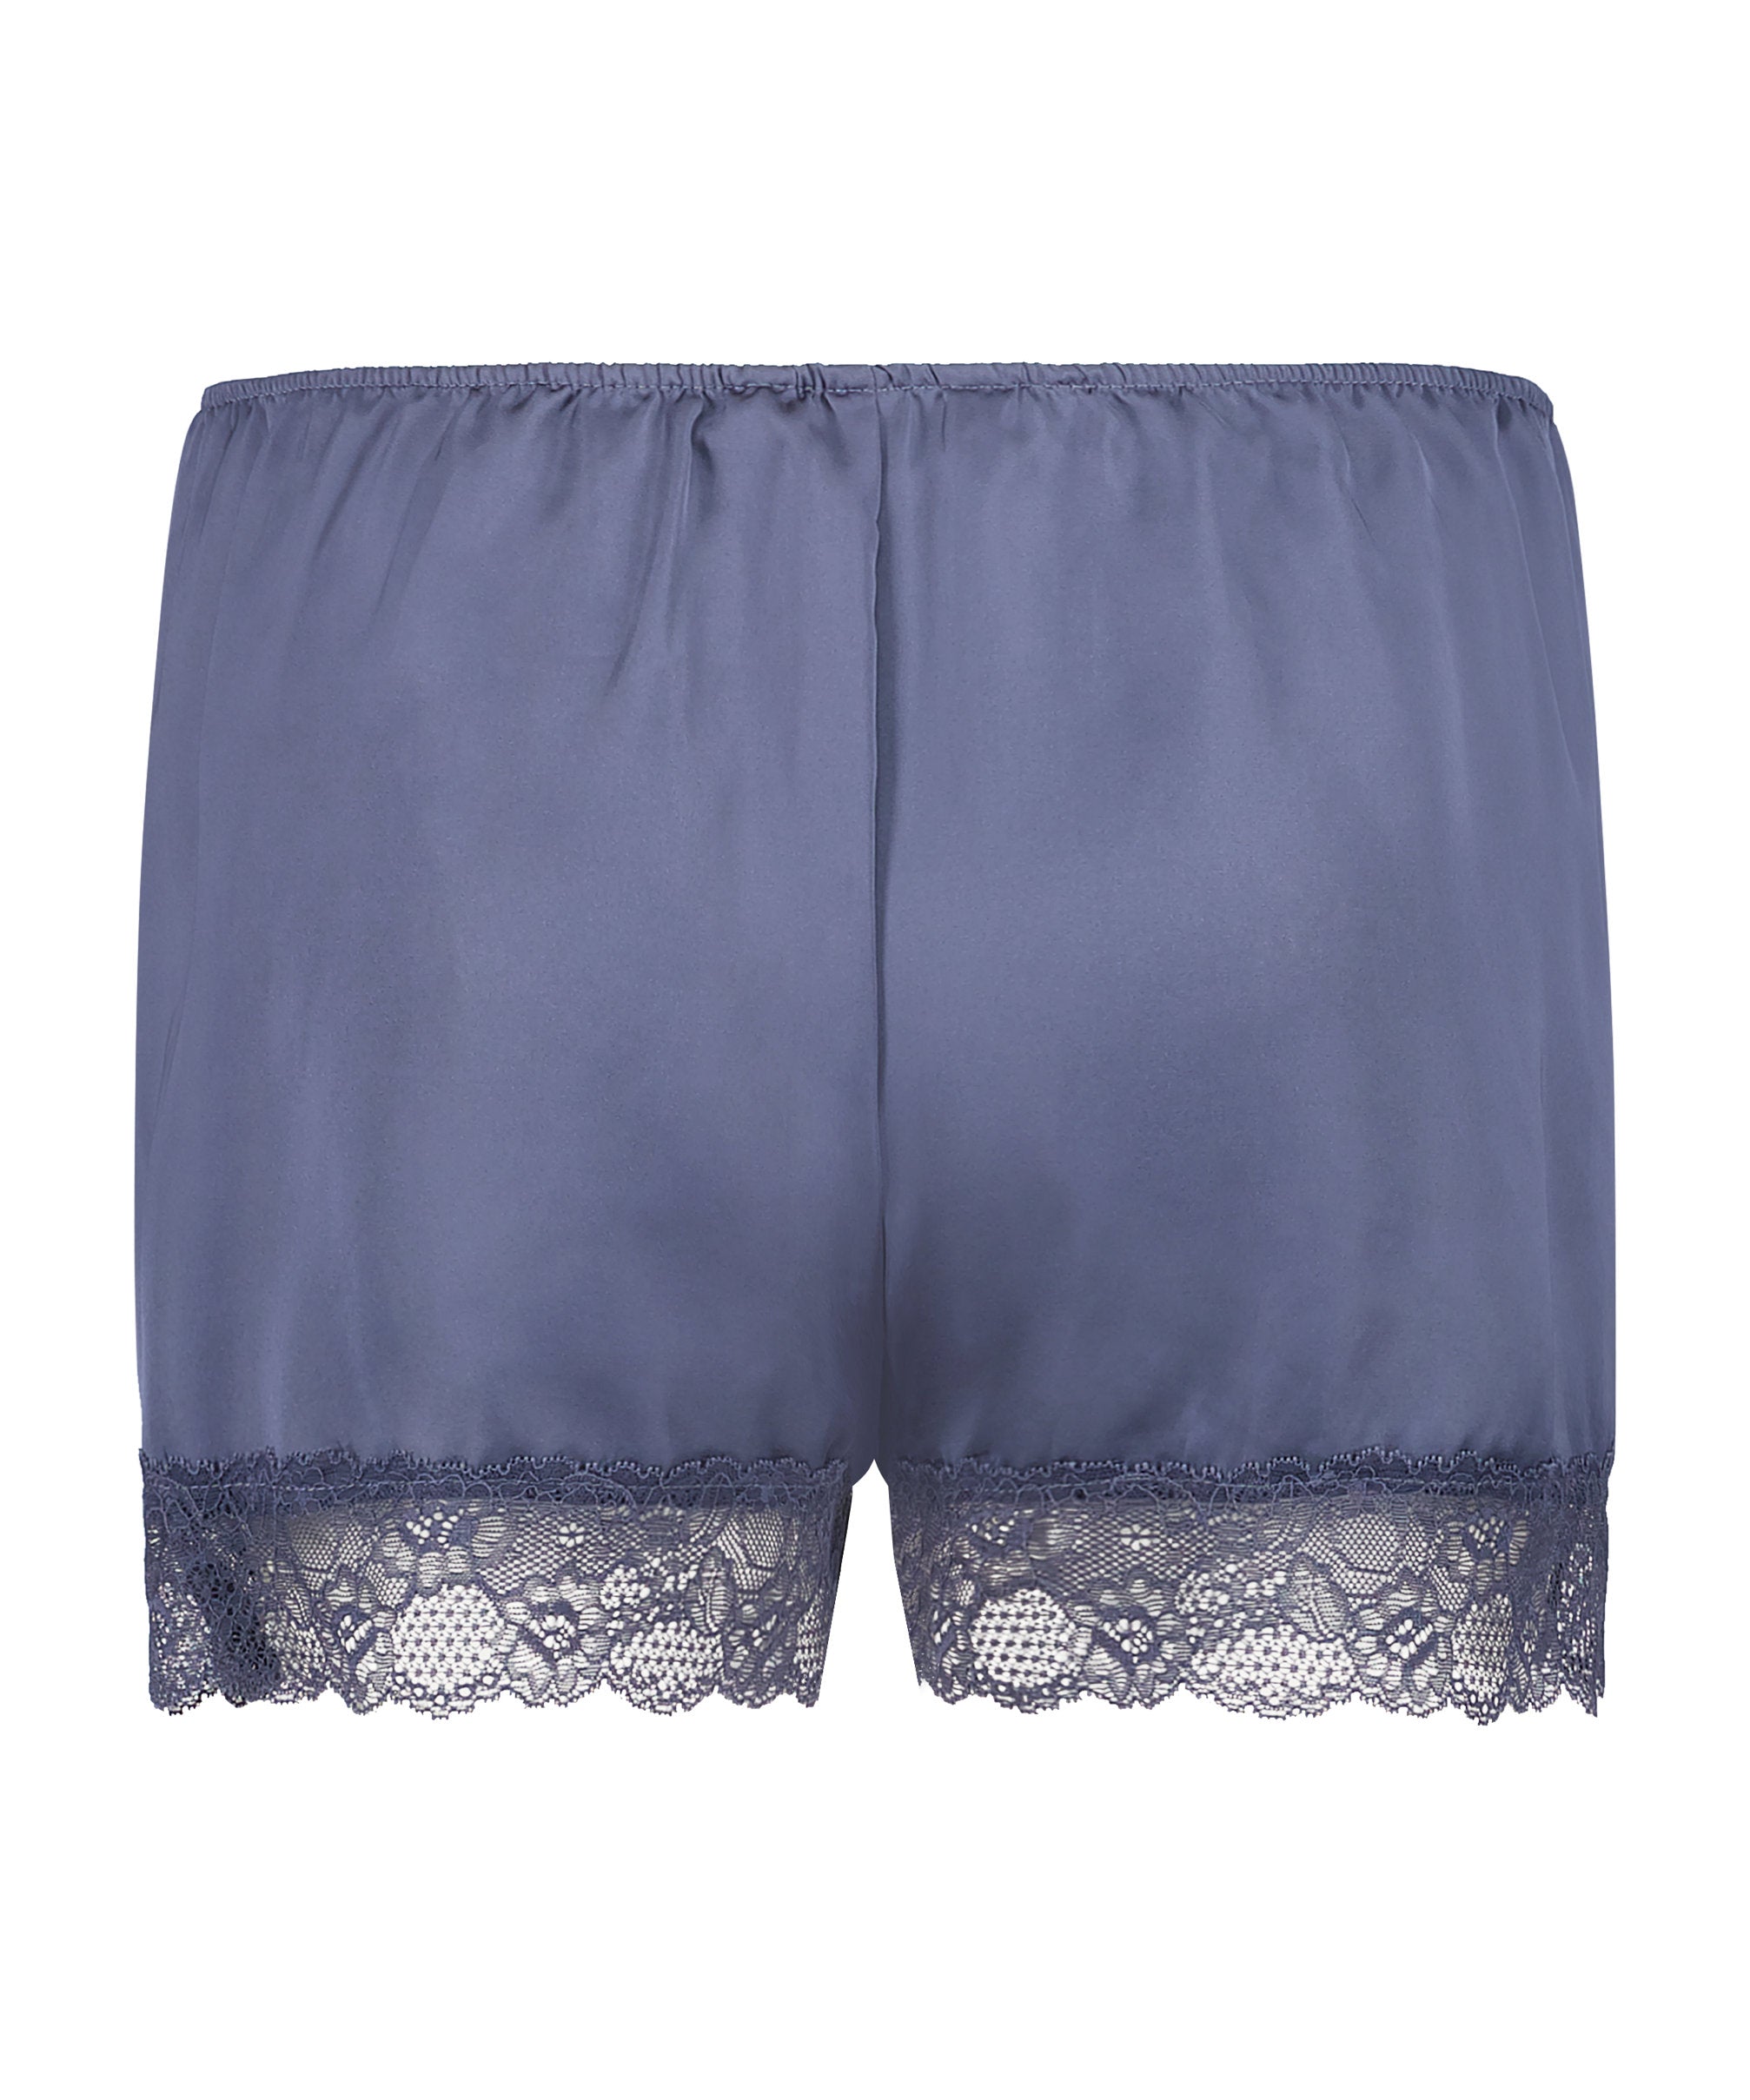 Meili Satin Shorts With Lace Trim_194797_Nightshadow Blue_05